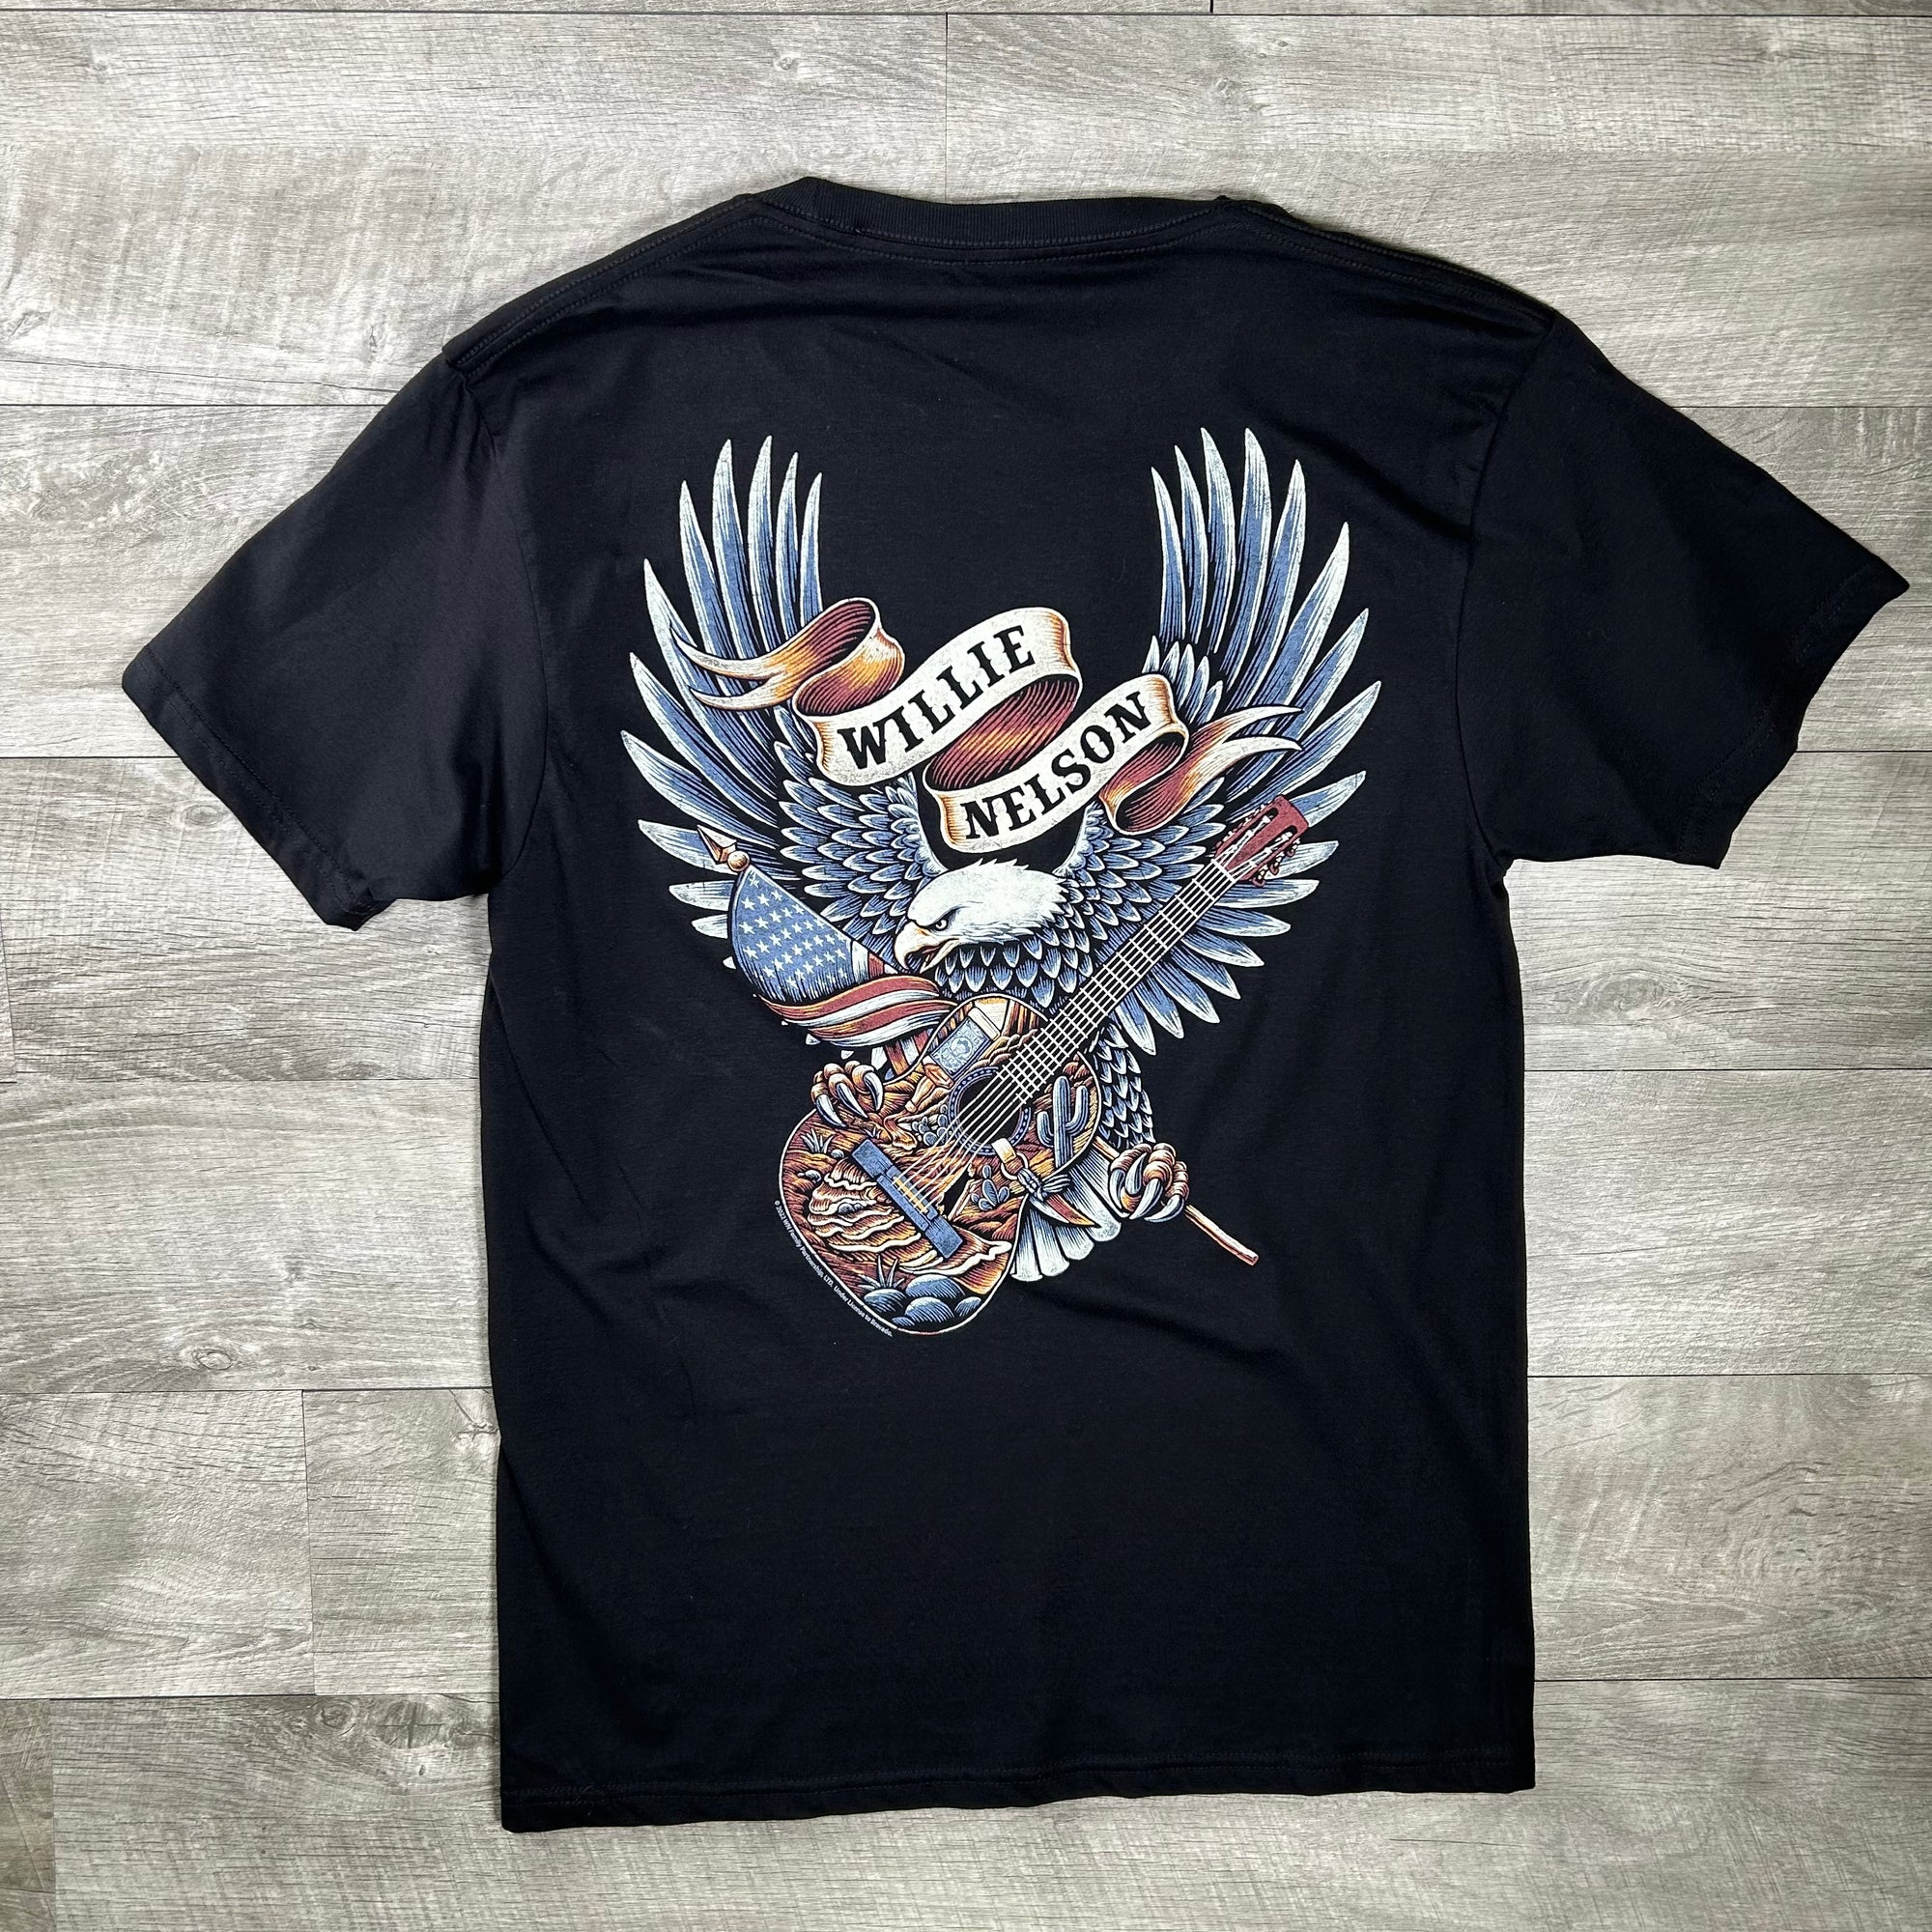 Willie Nelson "Eagle" T-Shirt